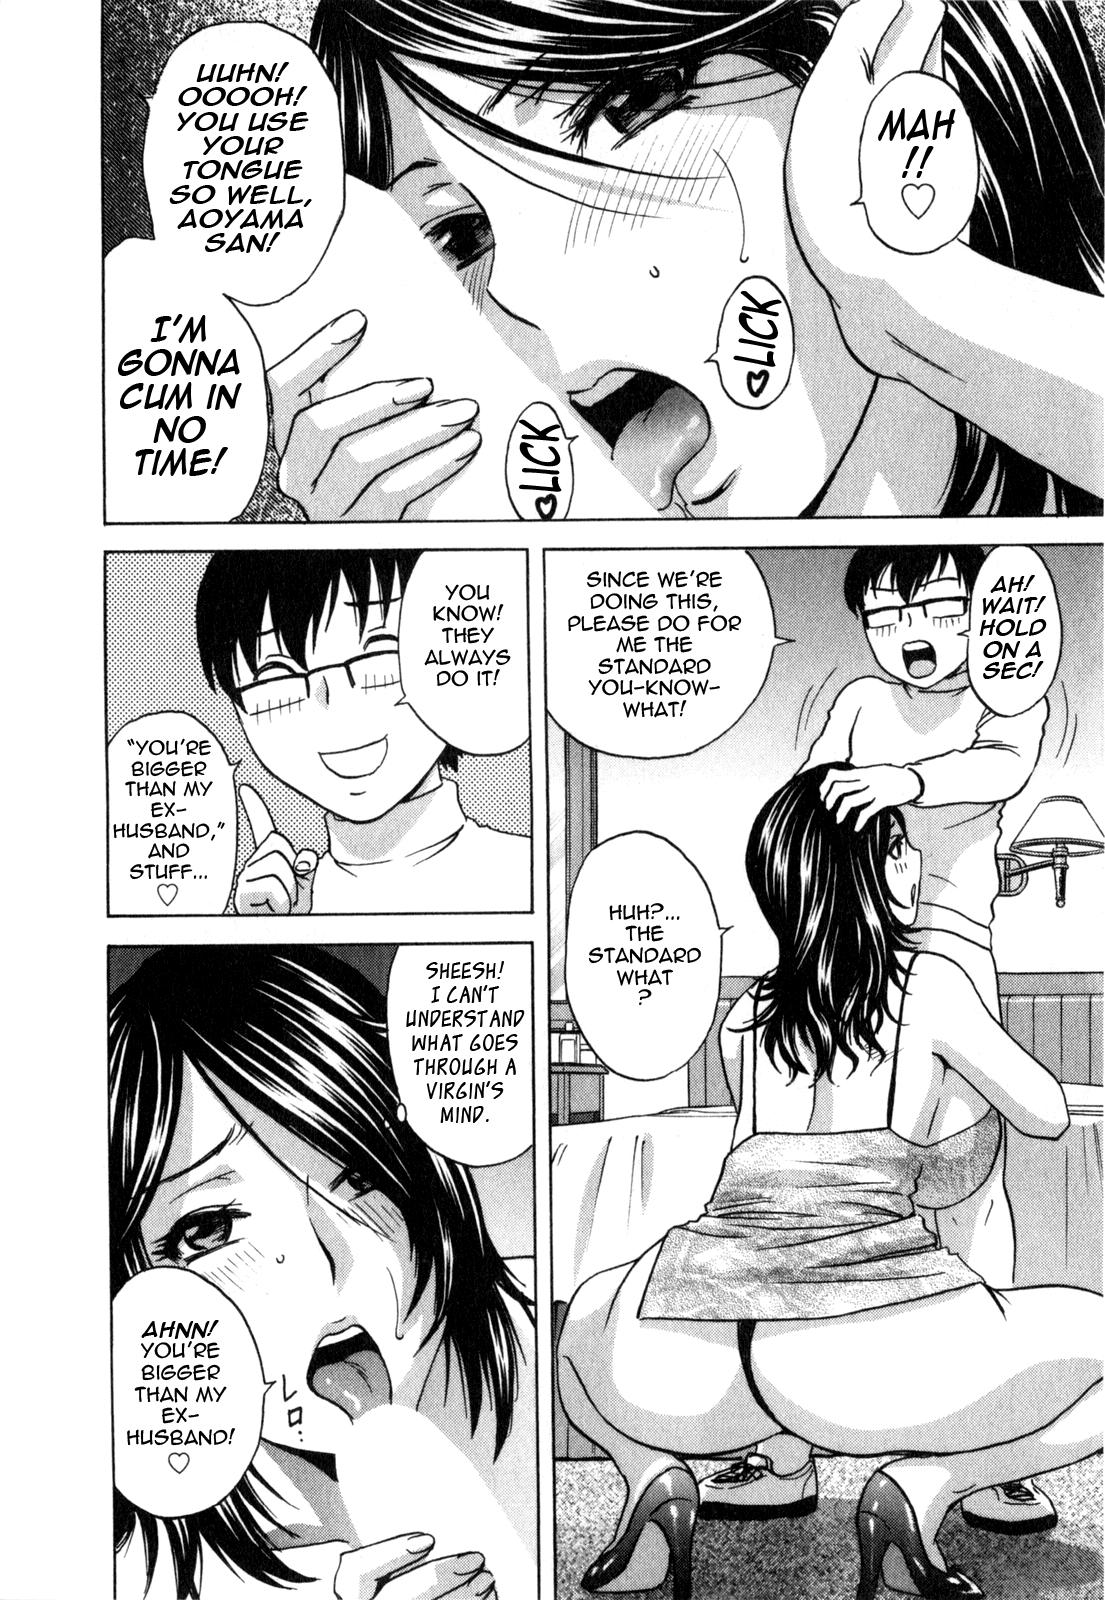 [Hidemaru] Life with Married Women Just Like a Manga 3 - Ch. 1-4 [English] {Tadanohito} 55